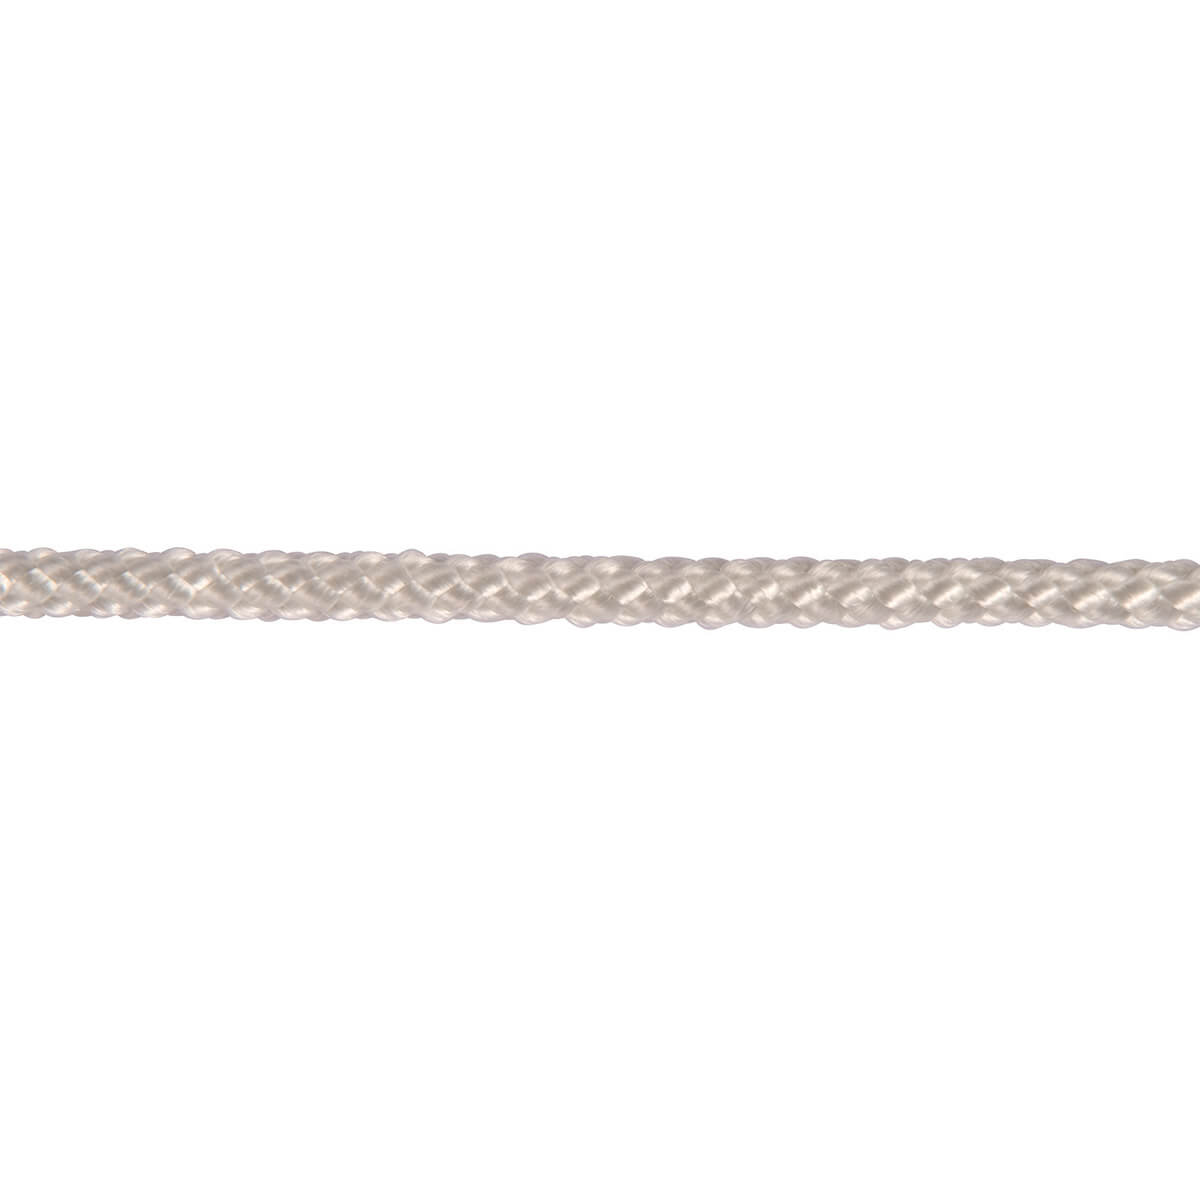 7/32"x100' Diamond Braided Polypropylene Rope, White